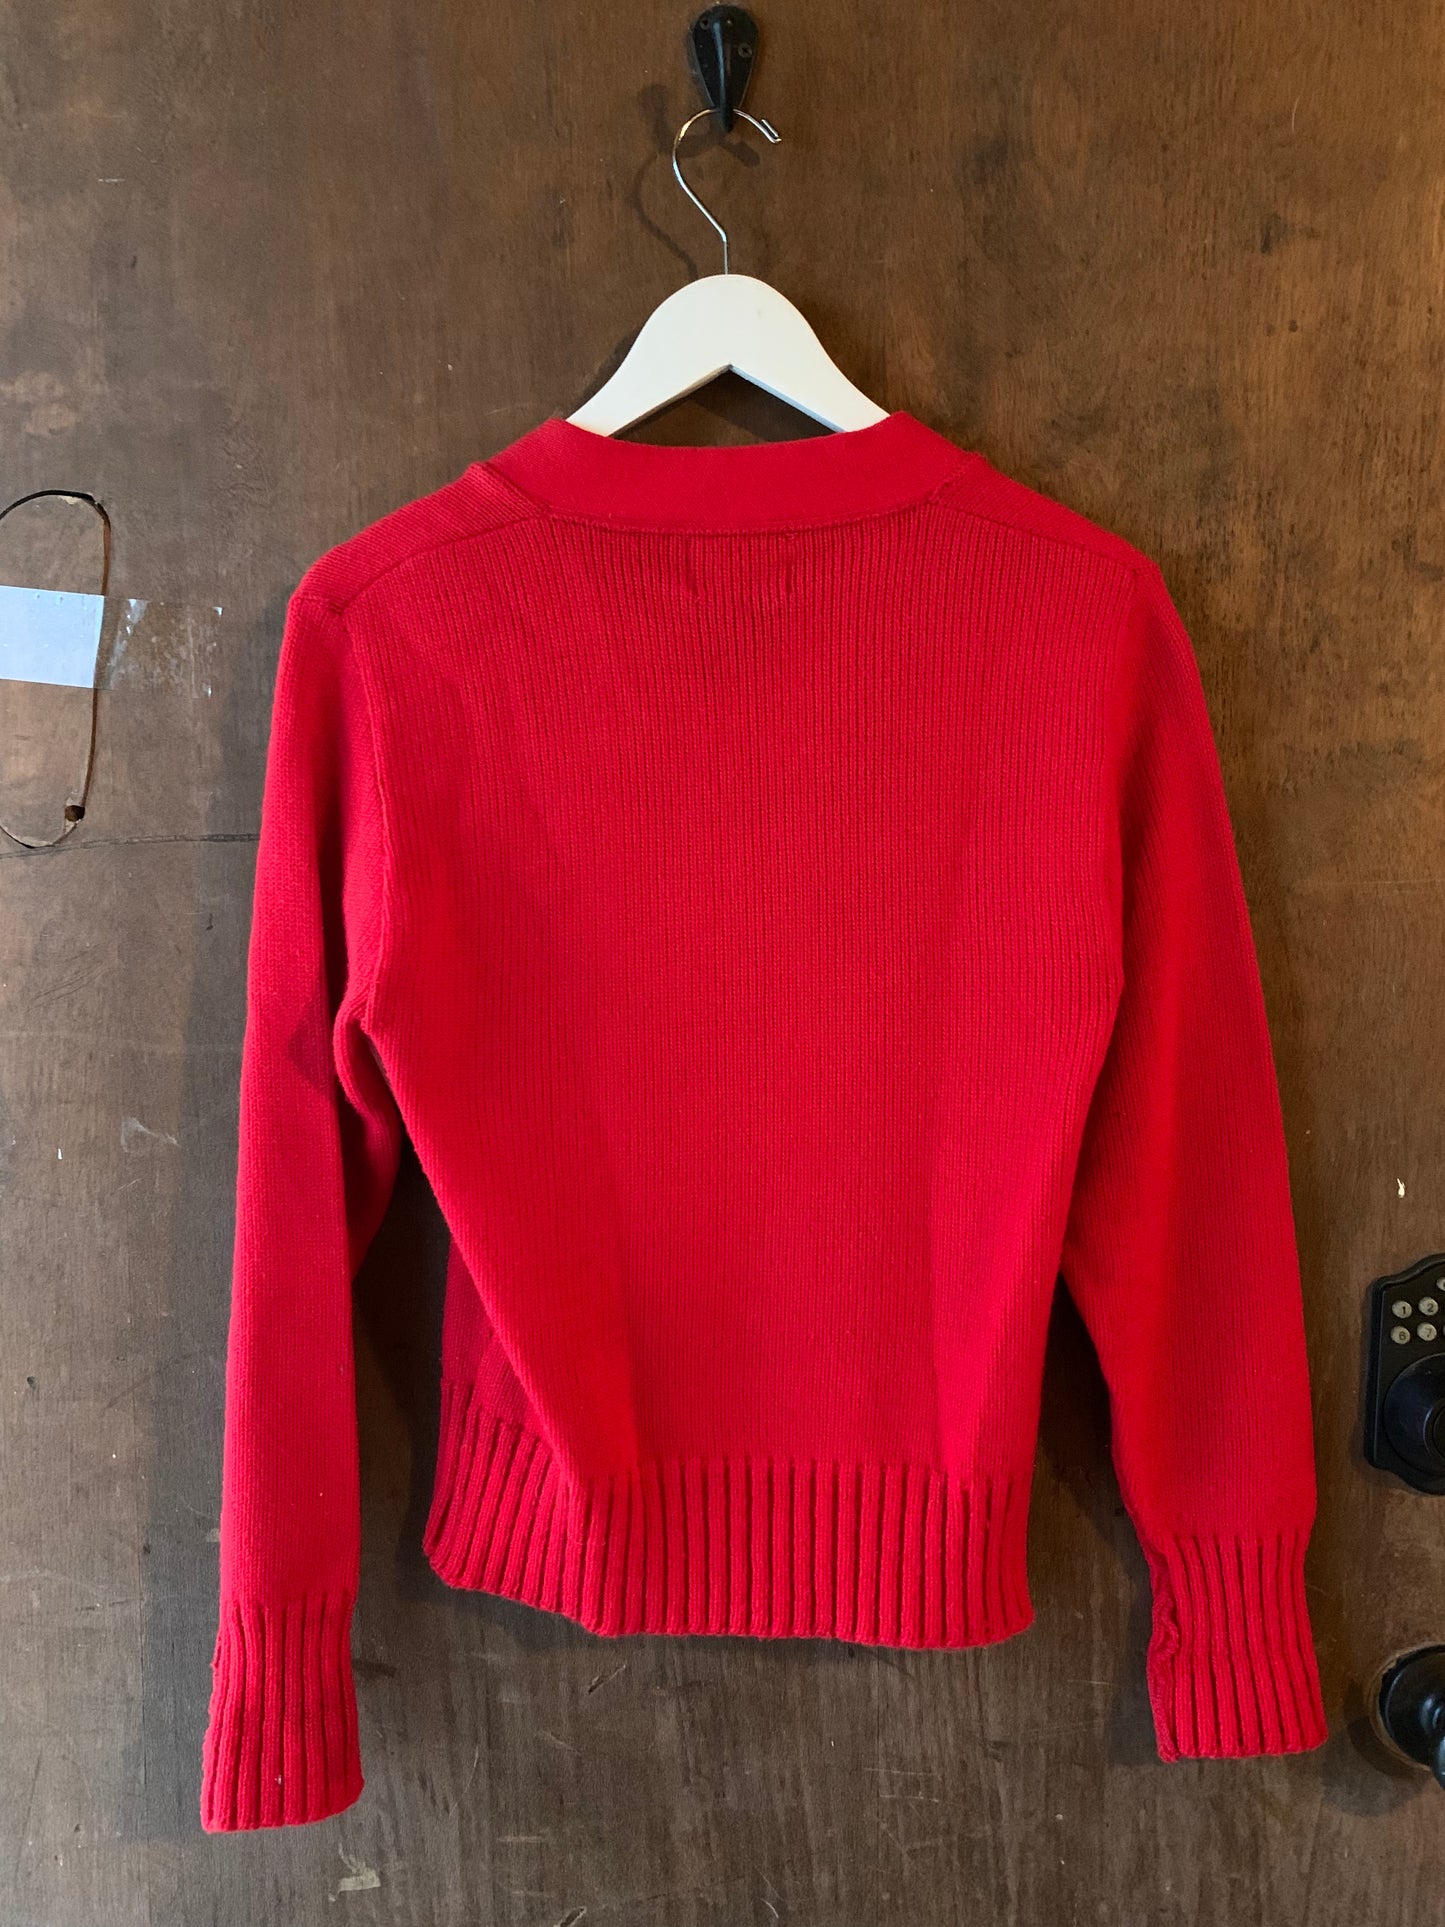 Red Athletic "J" V Neck Sweater (M)